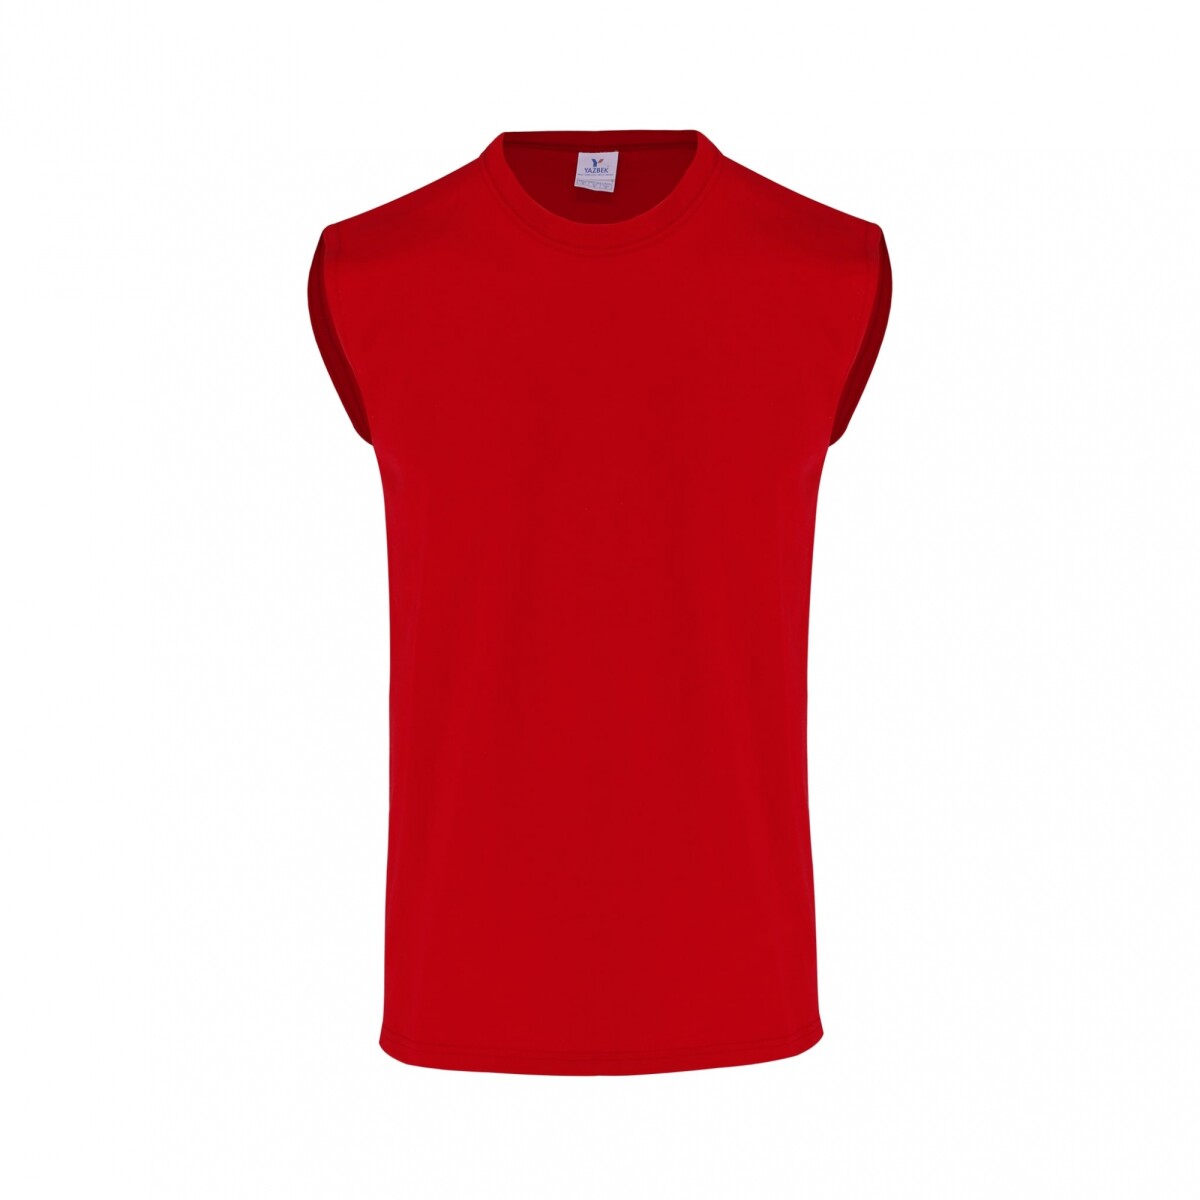 Camiseta a la base sin mangas - Rojo 